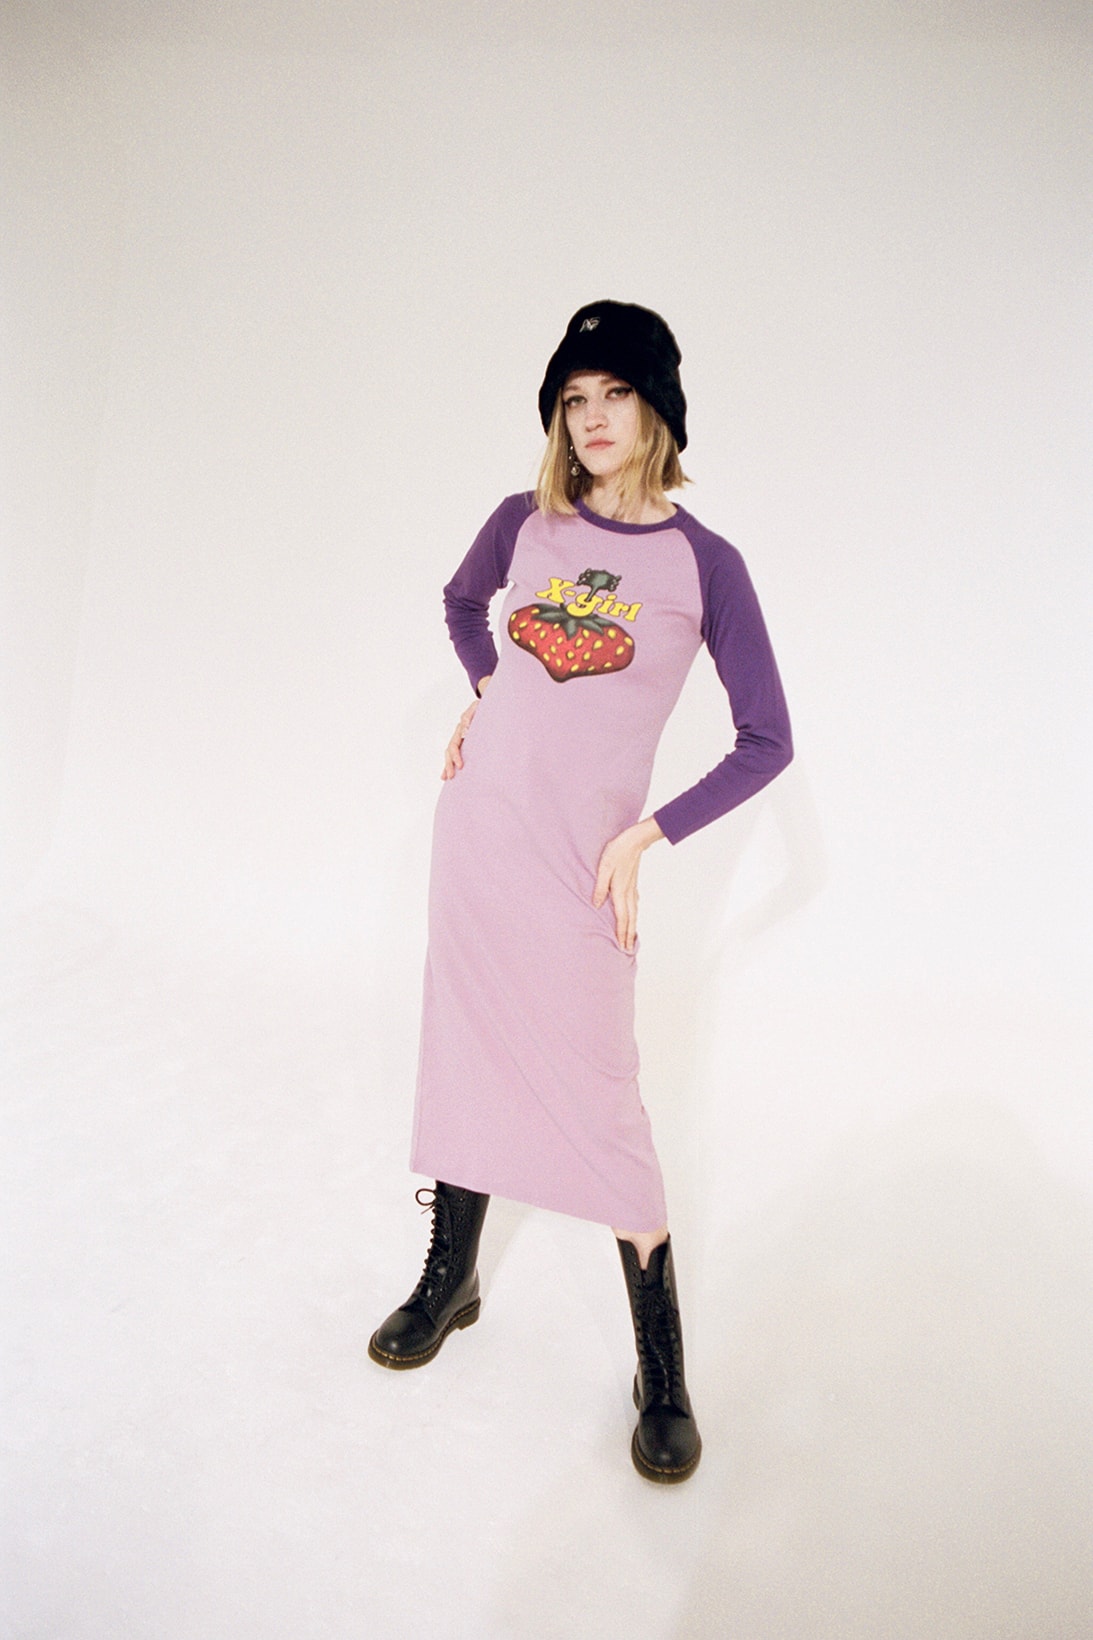 x girl hysteric glamour collaboration dover street market london coco gordon moore lookbook black hat purple dress boots